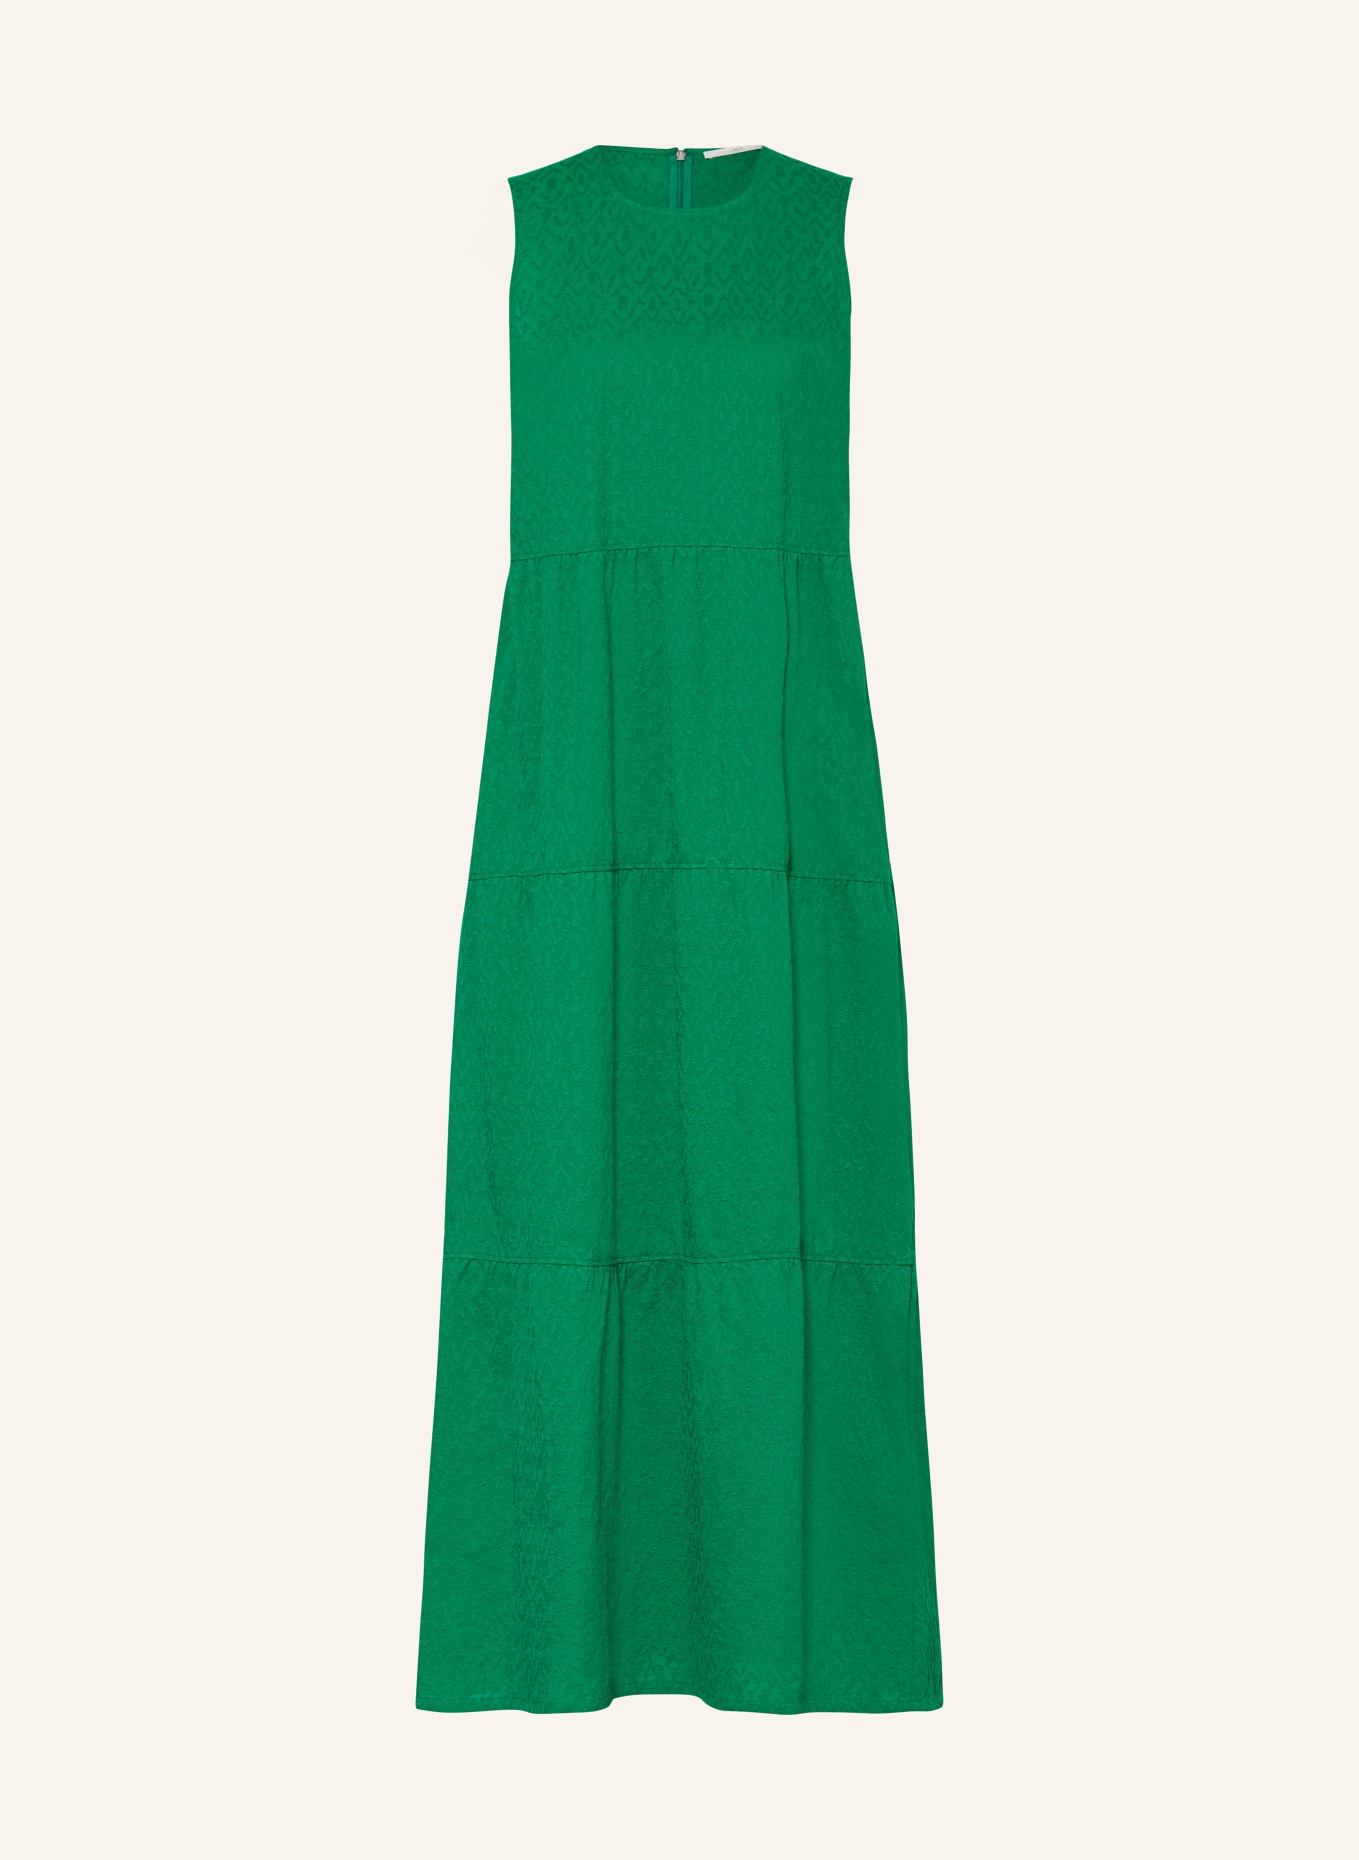 LANIUS Jacquard-Kleid, Farbe: GRÜN (Bild 1)